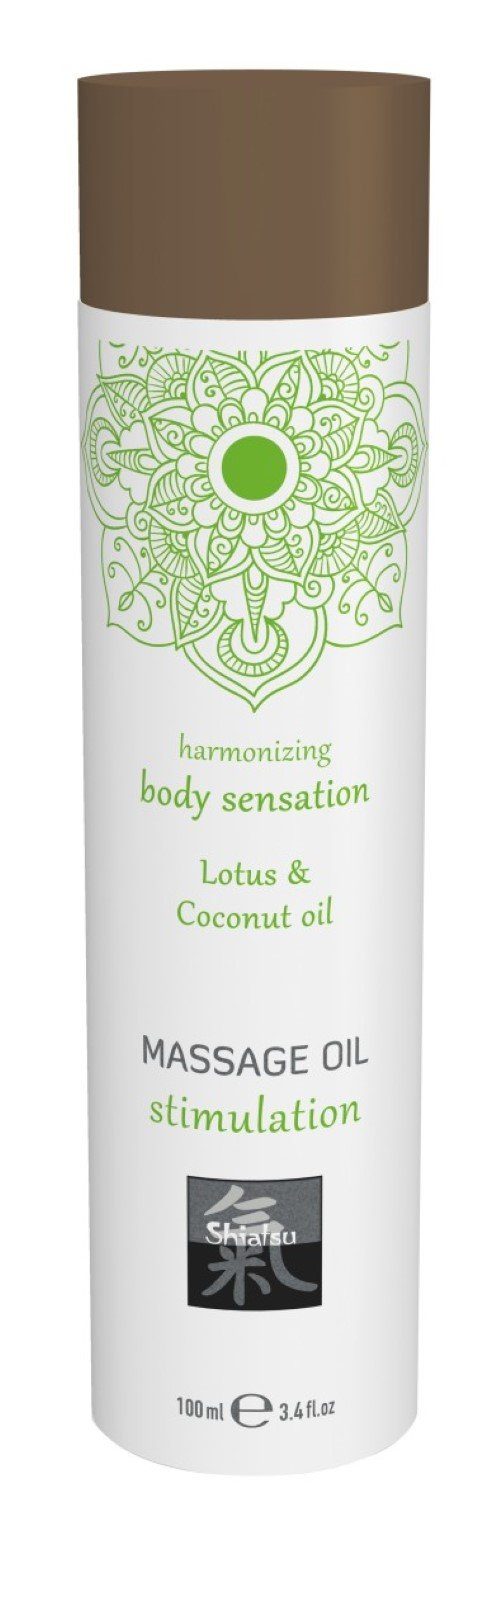 Lotus oil HOT & SHIATSU 100ml Coconut & Gleit- Shiatsu - Massageöl ml 100 Massage oil stimulation